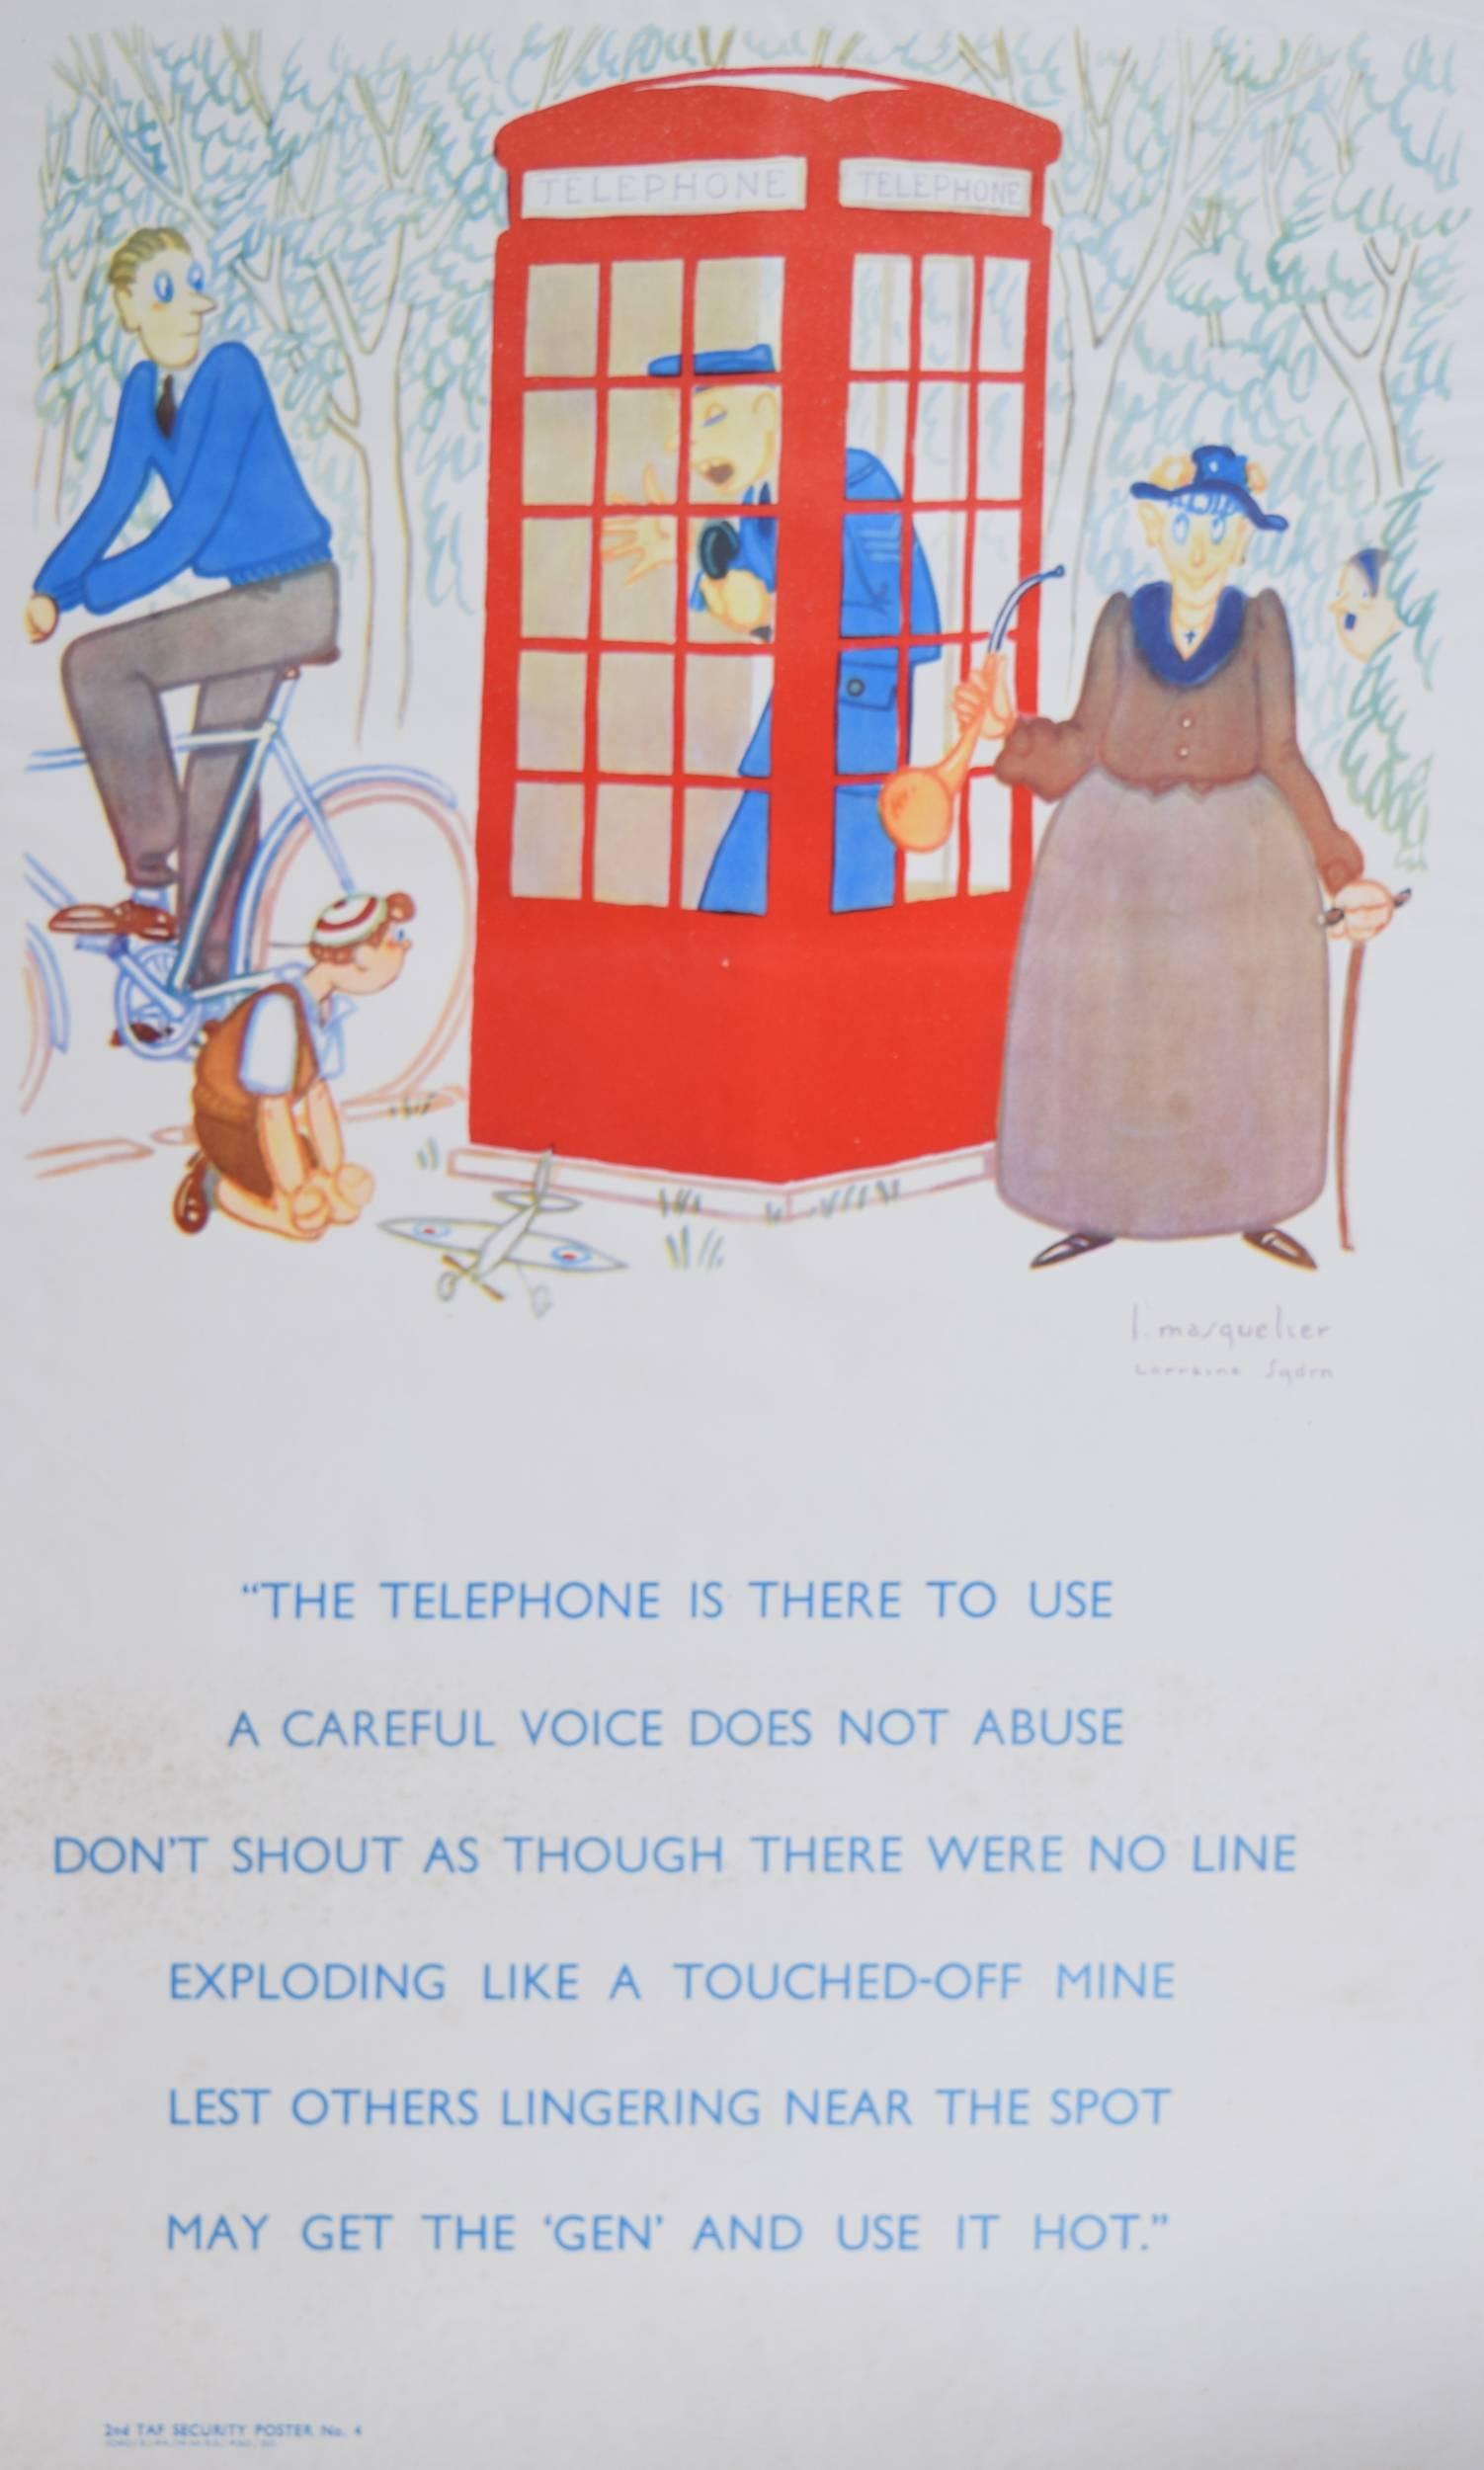 Careless Talk Costs Lives The Telephone - World War 2 Propaganda original poster - Print by Louis Masquelier 